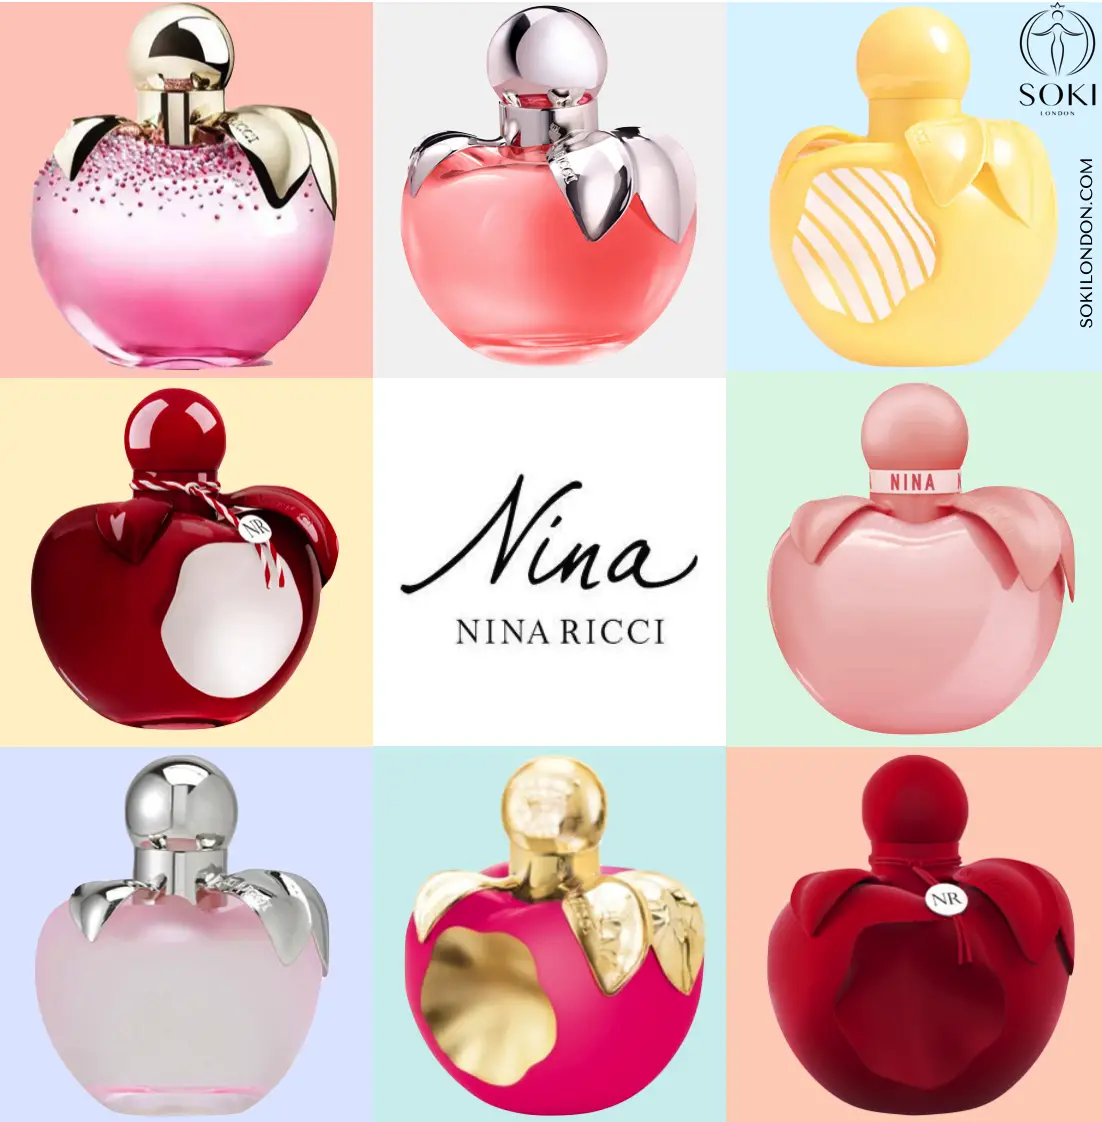 Il support Forvirret A Guide To Every Nina by Nina Ricci Perfume | SOKI LONDON